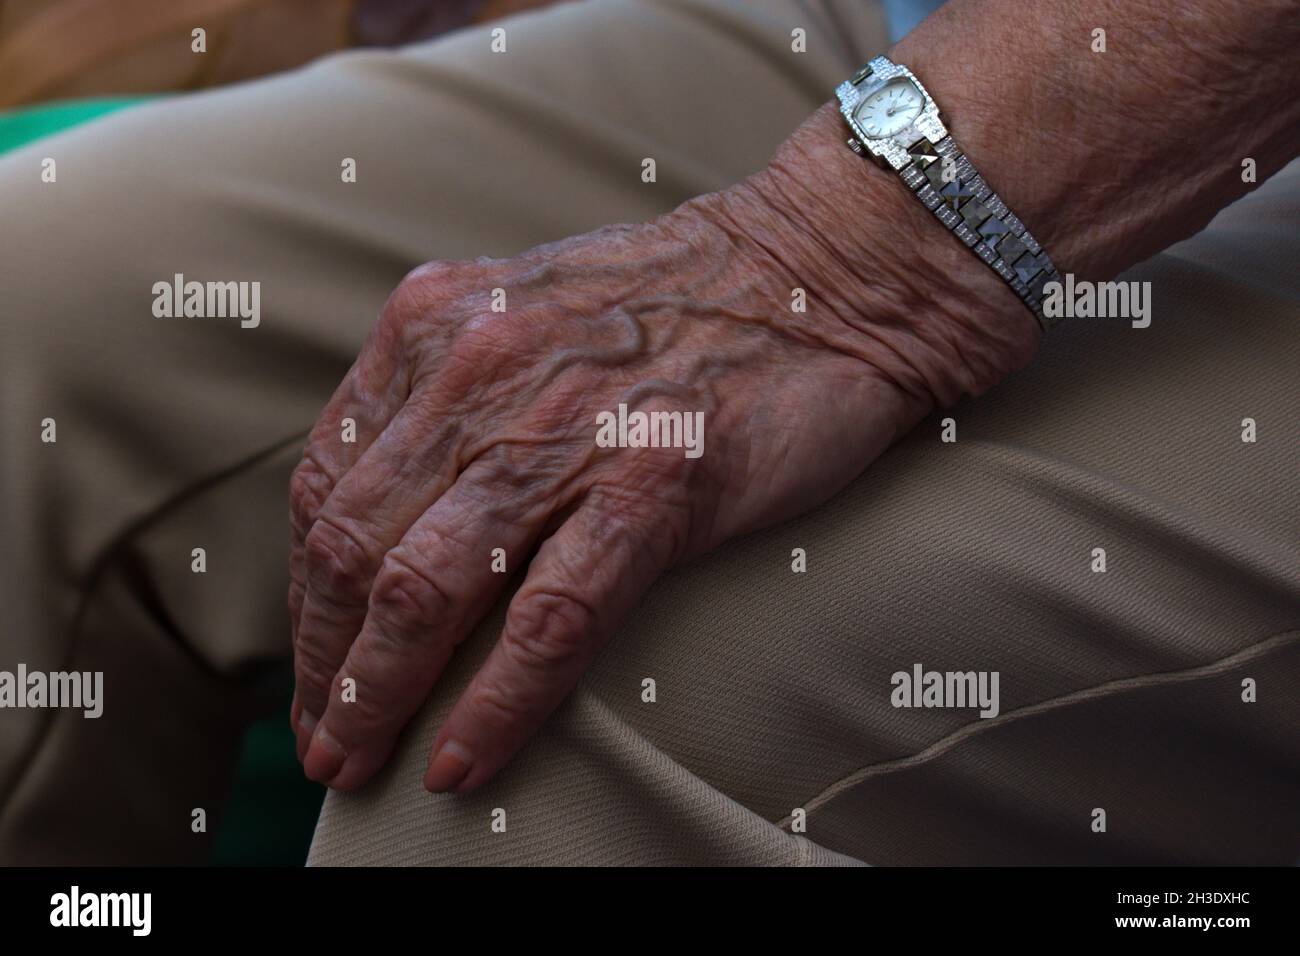 elderly woman hand on her knee Stock Photo